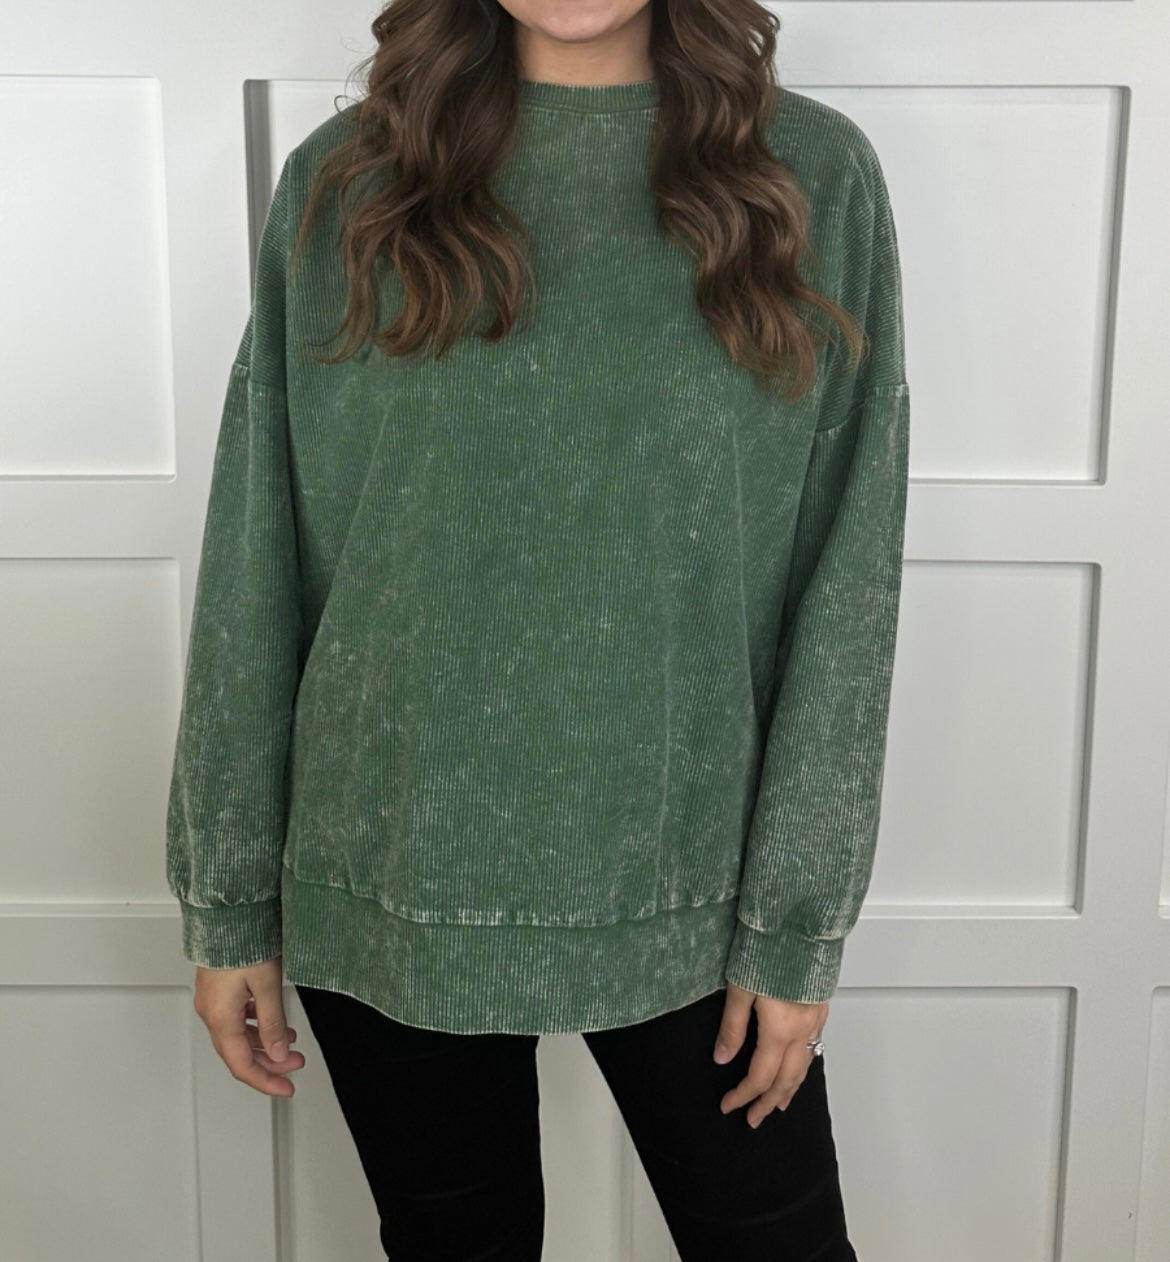 Gina Corded Sweater